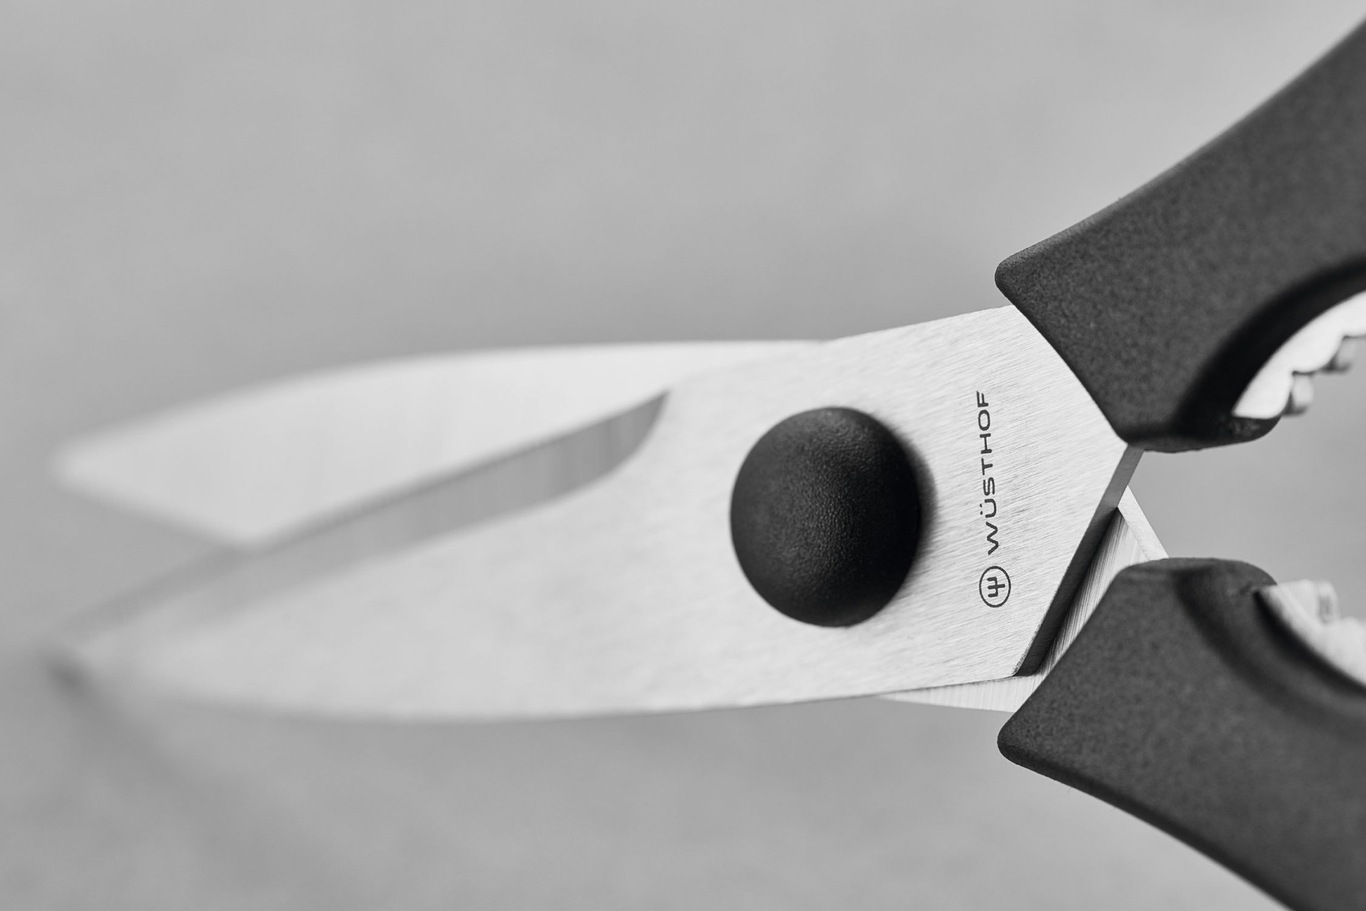 https://royaldesign.com/image/2/wusthof-kitchen-scissors-21-cm-black-1?w=800&quality=80